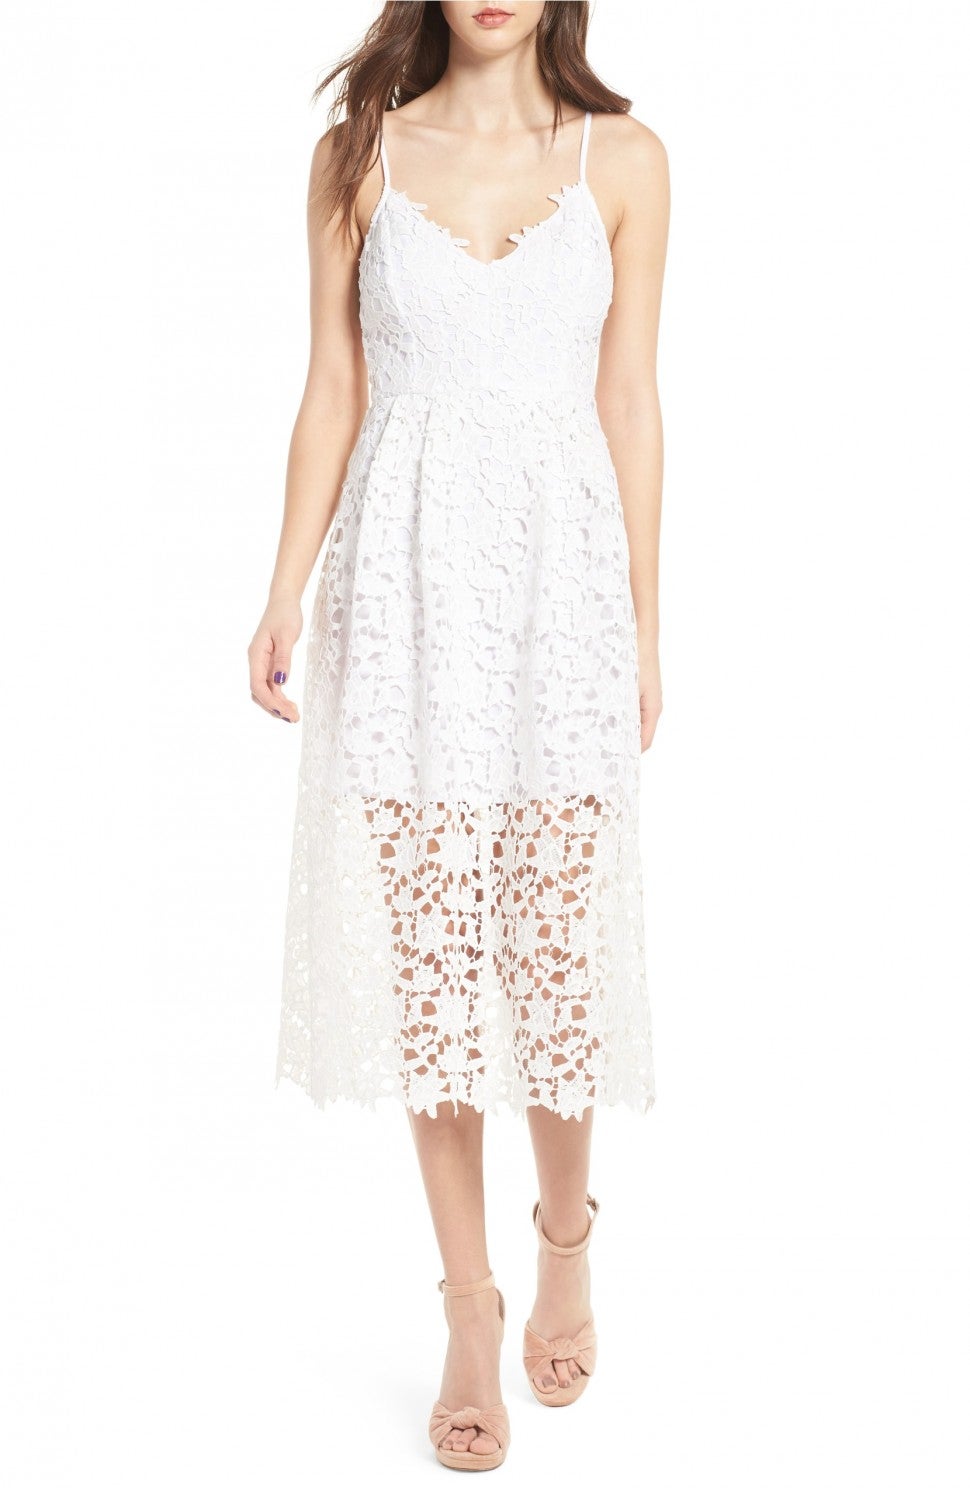 ASTR white lace dress